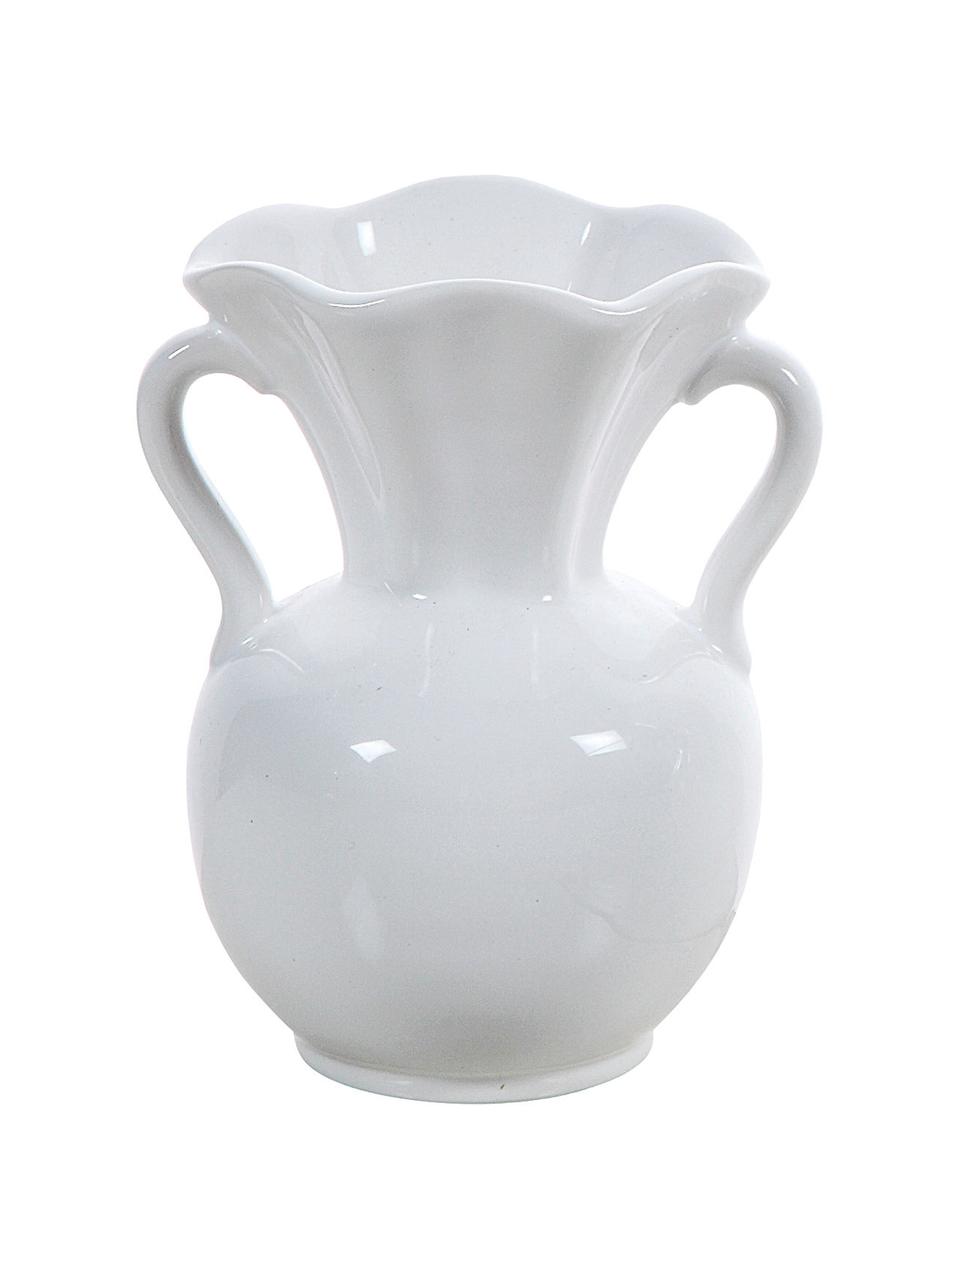 Keramik-Vasen-Set Mico in Weiss, 3-tlg., Keramik, Weiss, B 10 x H 12 cm